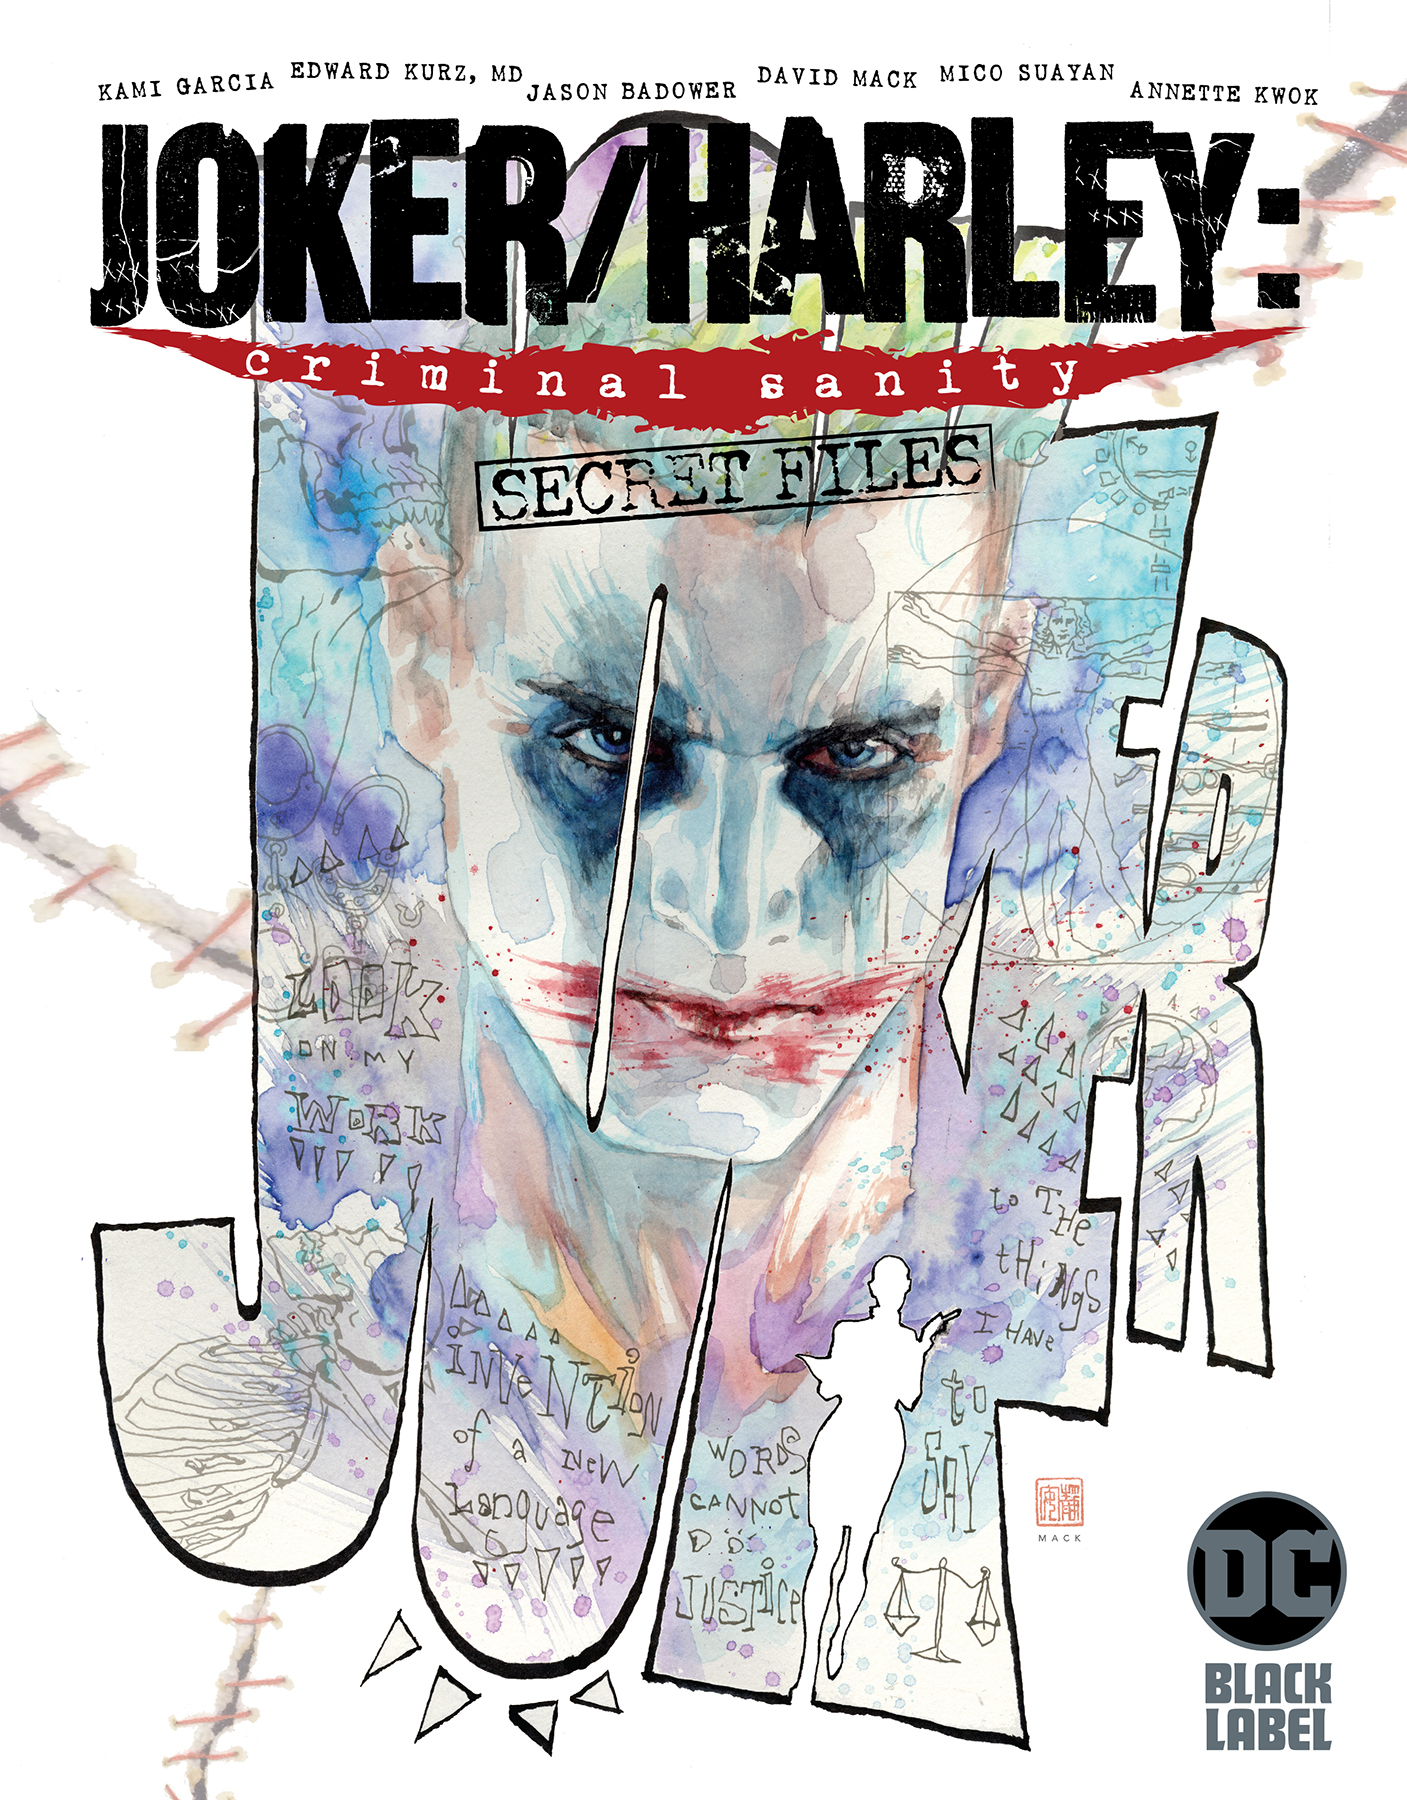 Joker Harley Criminal Sanity Secret Files #1